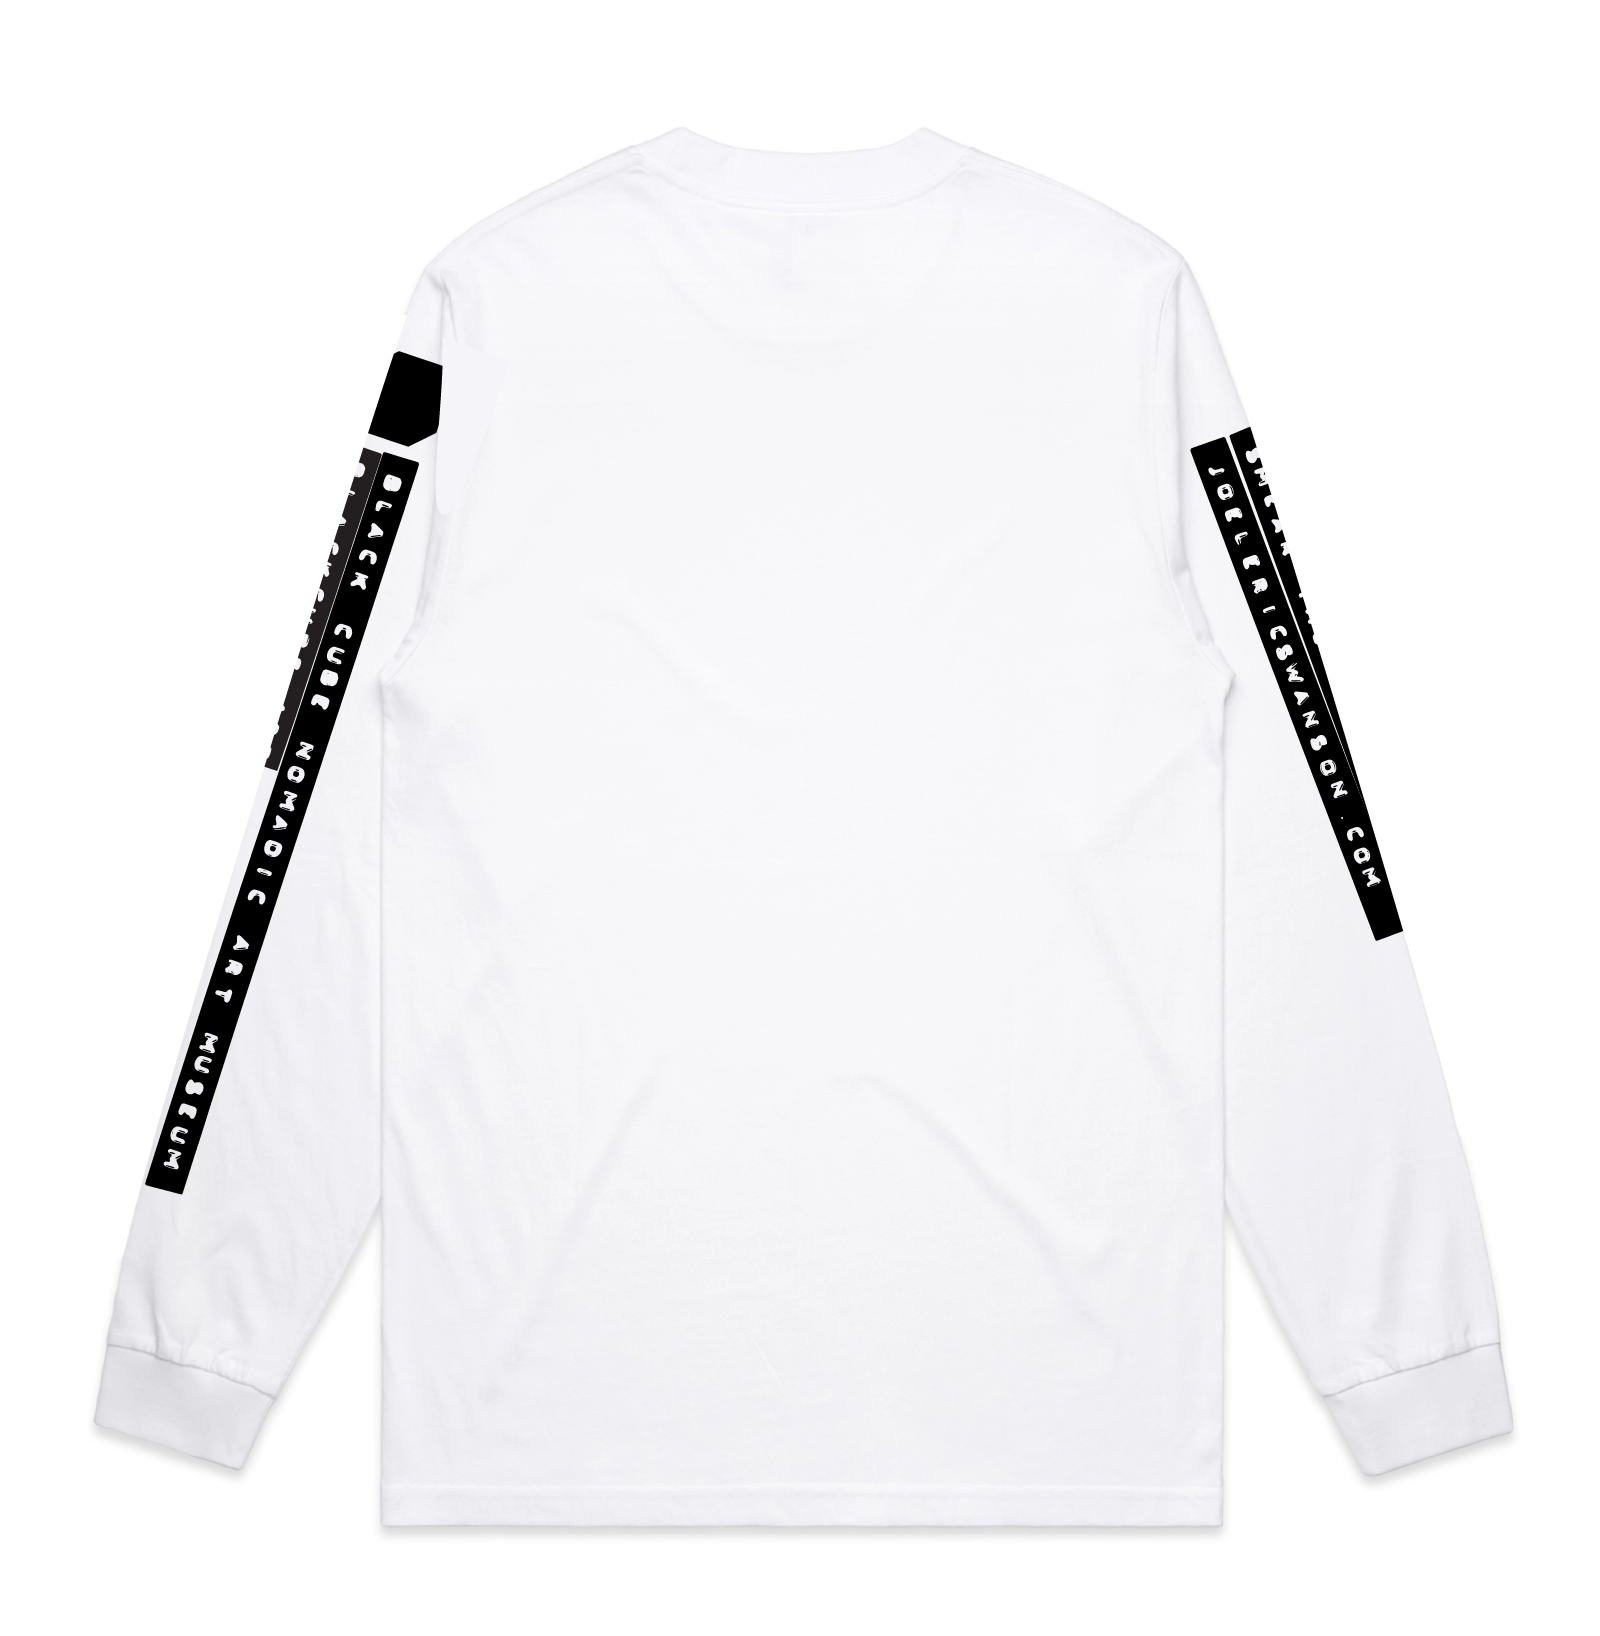 Joel Swanson x Black Cube – “Smear the Queer” T-shirt